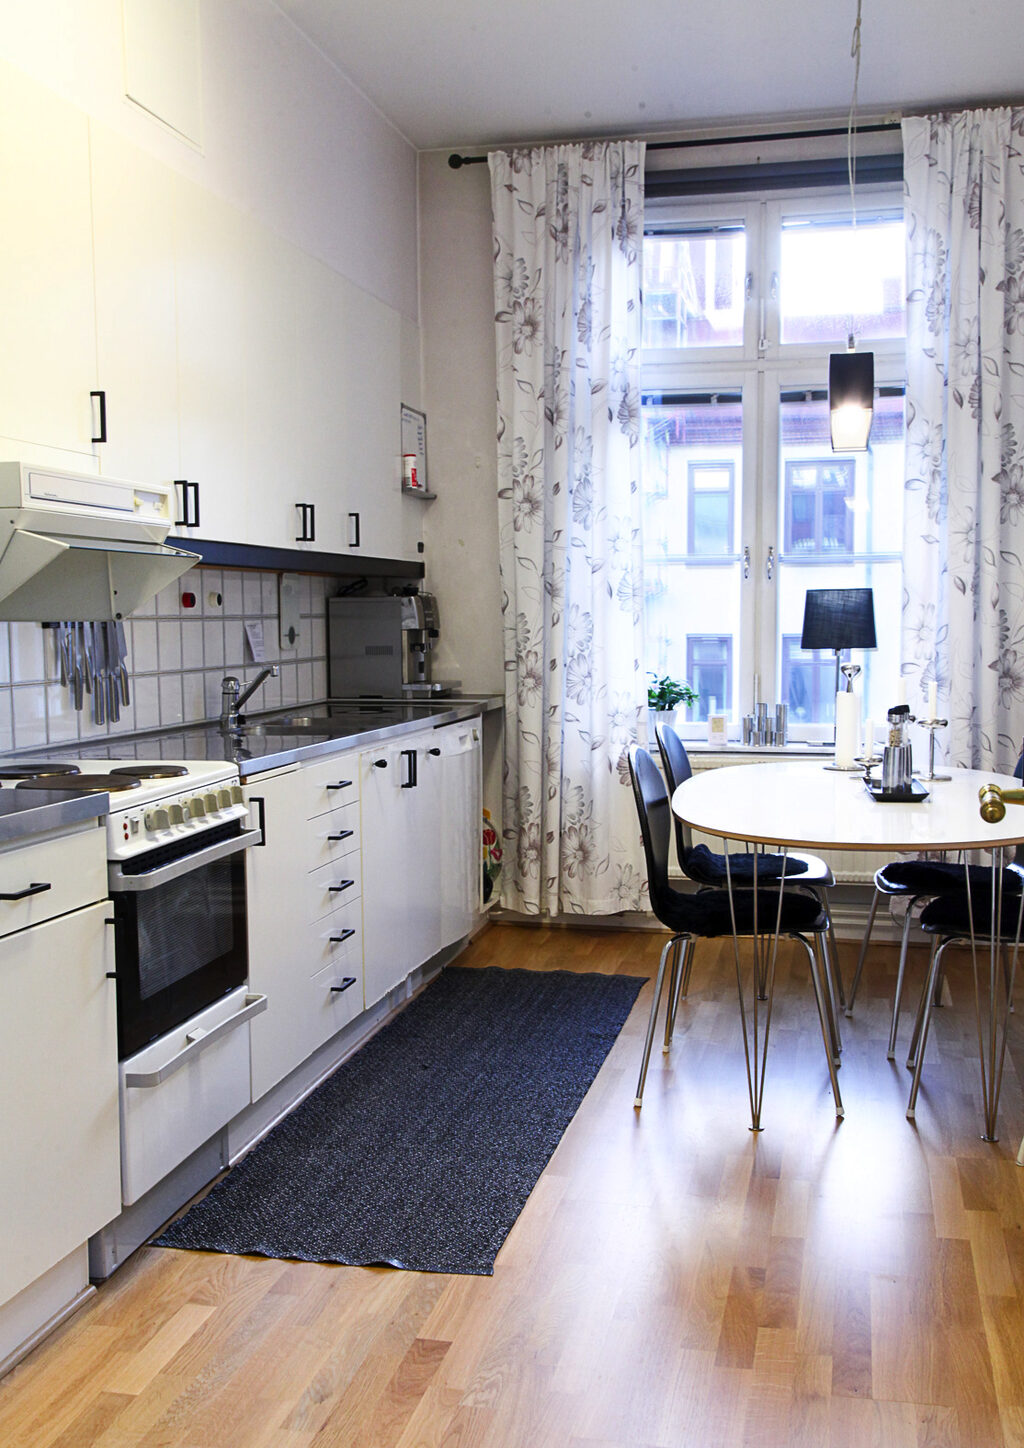 Lägenhetsbyte - Kristinelundsgatan 3, 41137, Göteborg